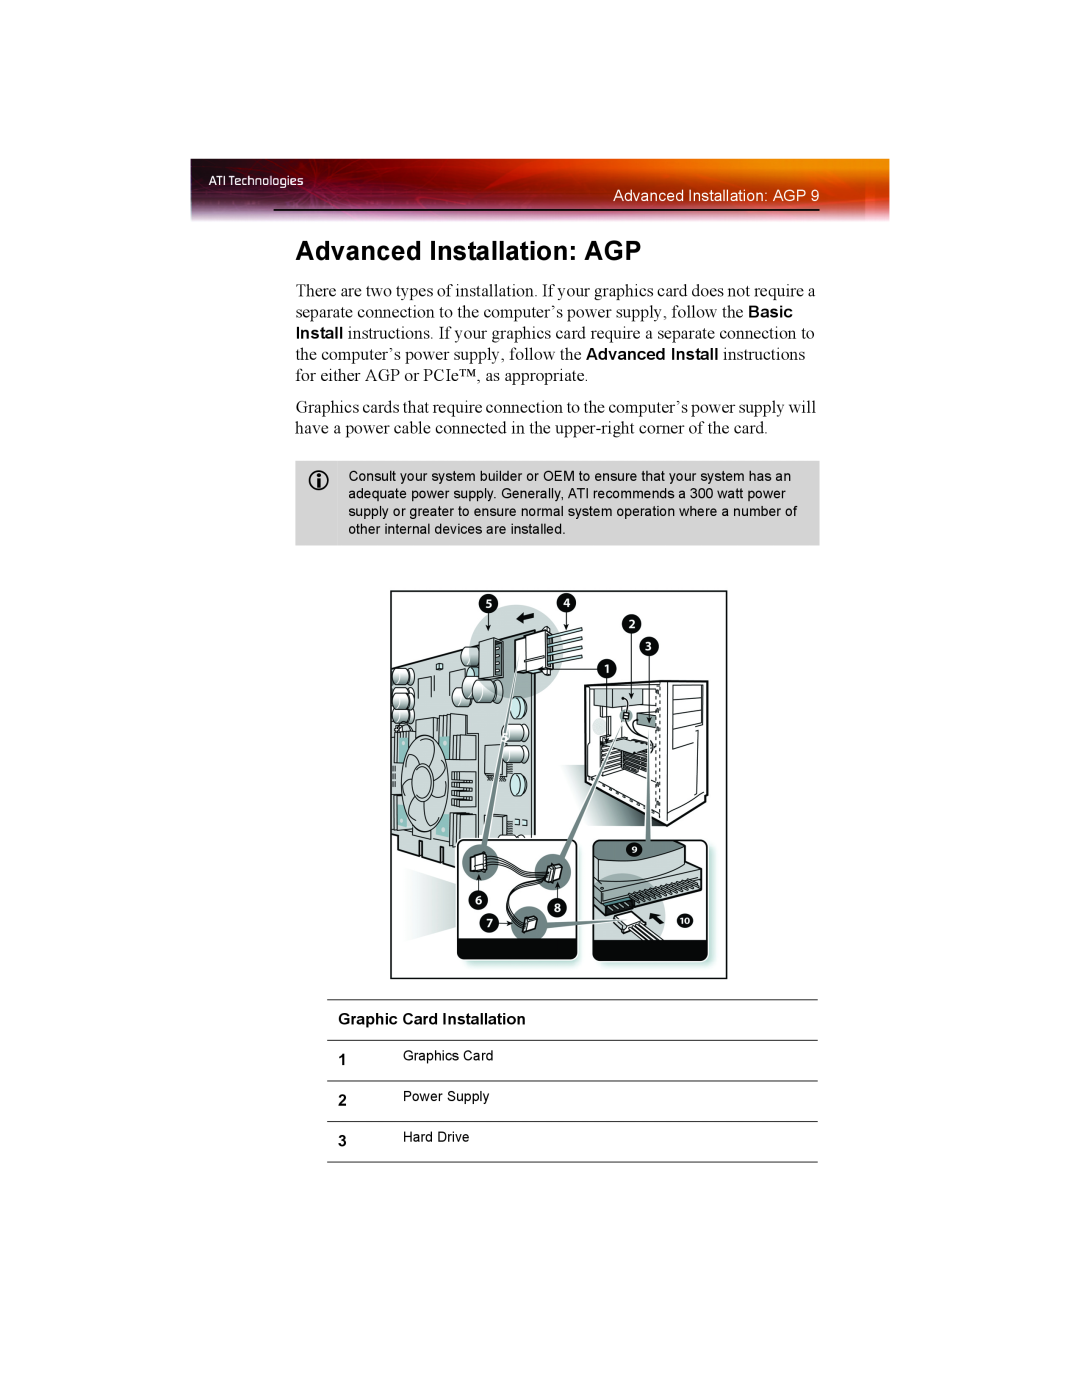 ATI Technologies X1550 SERIES manual Advanced Installation AGP, Graphic Card Installation 